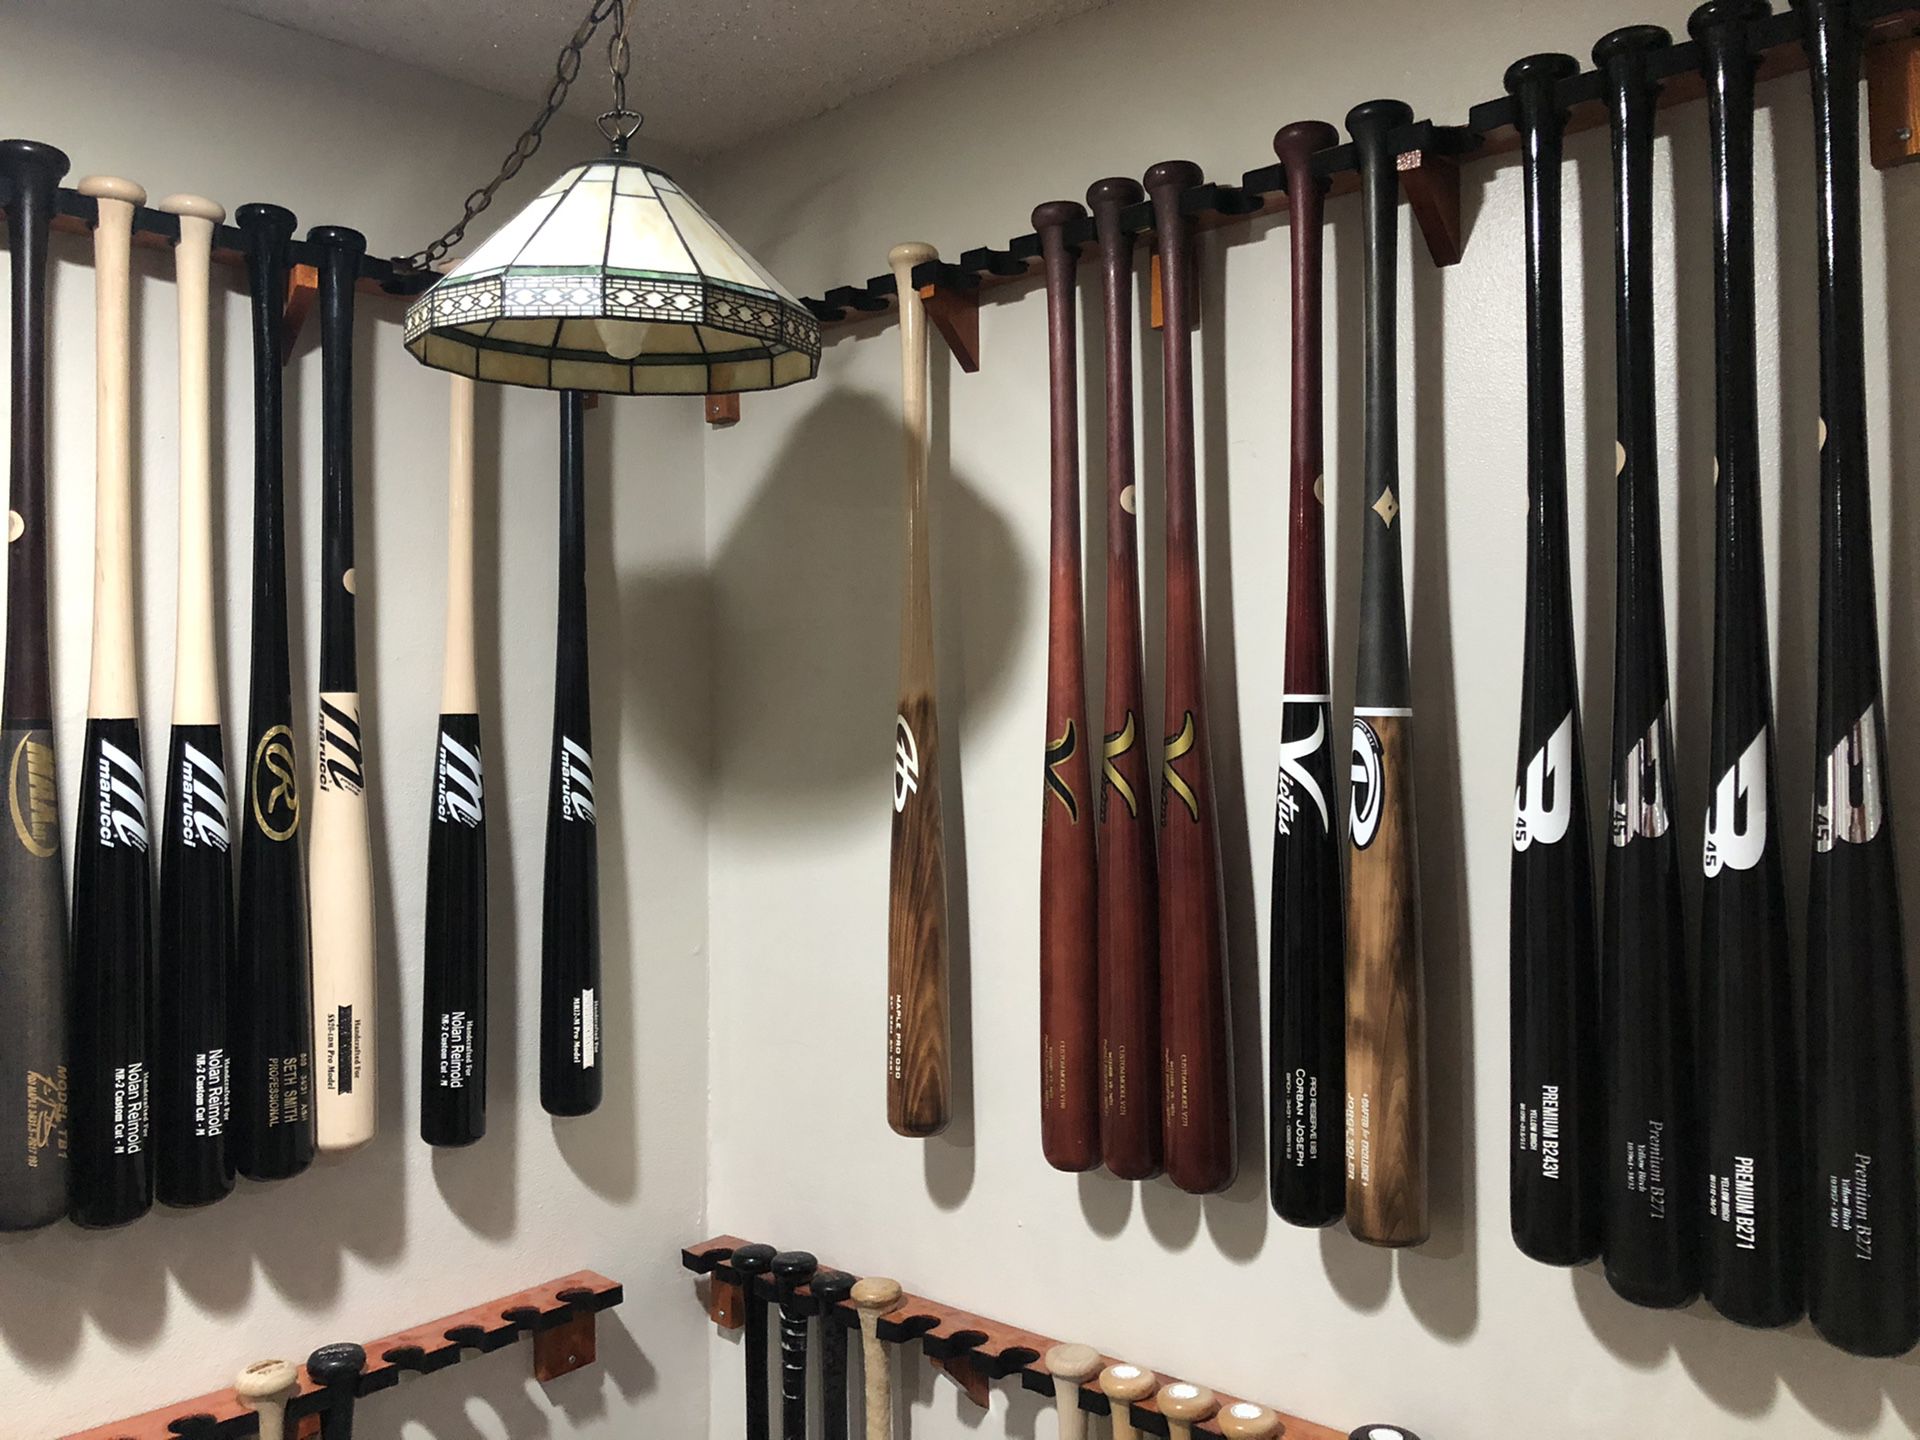 Baseball glove, batting gloves, and bats for sale